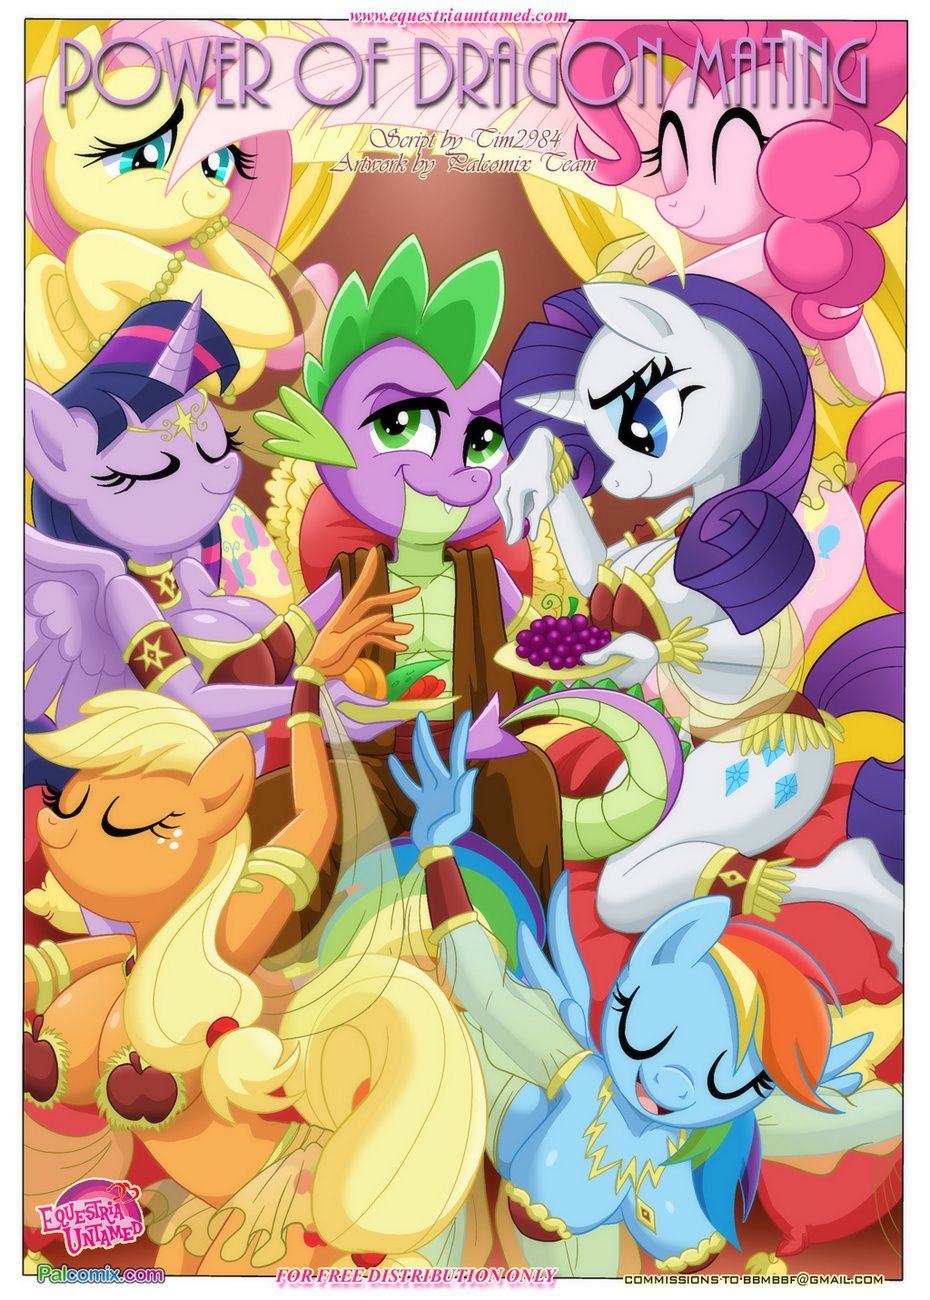 Spike's Harem (My Little Pony â€“ Friendship Is Magic) [PalComix] - Free  Hentai Manga, Adult Webtoon, Doujinshi Manga and Mature Comics